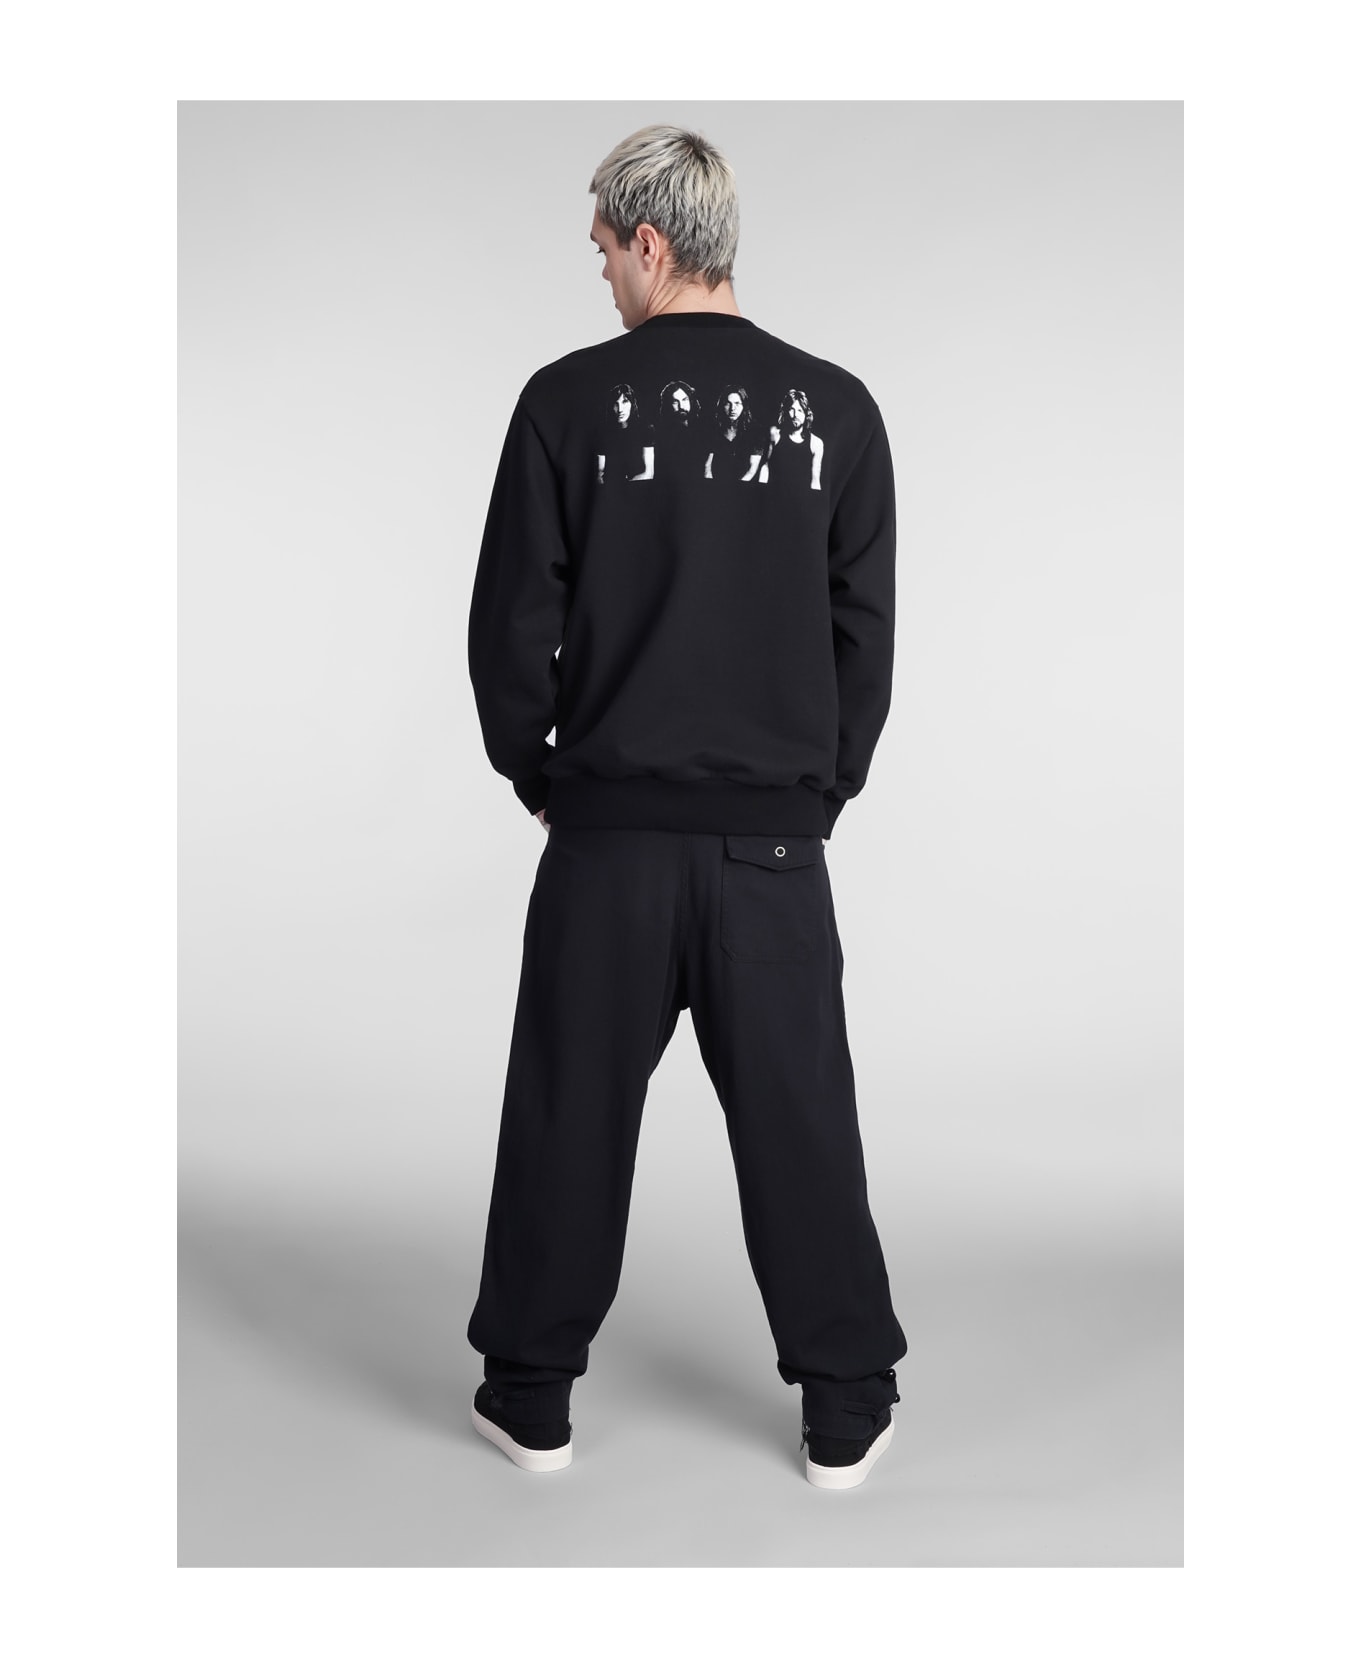 Undercover Jun Takahashi Sweatshirt In Black Cotton - black